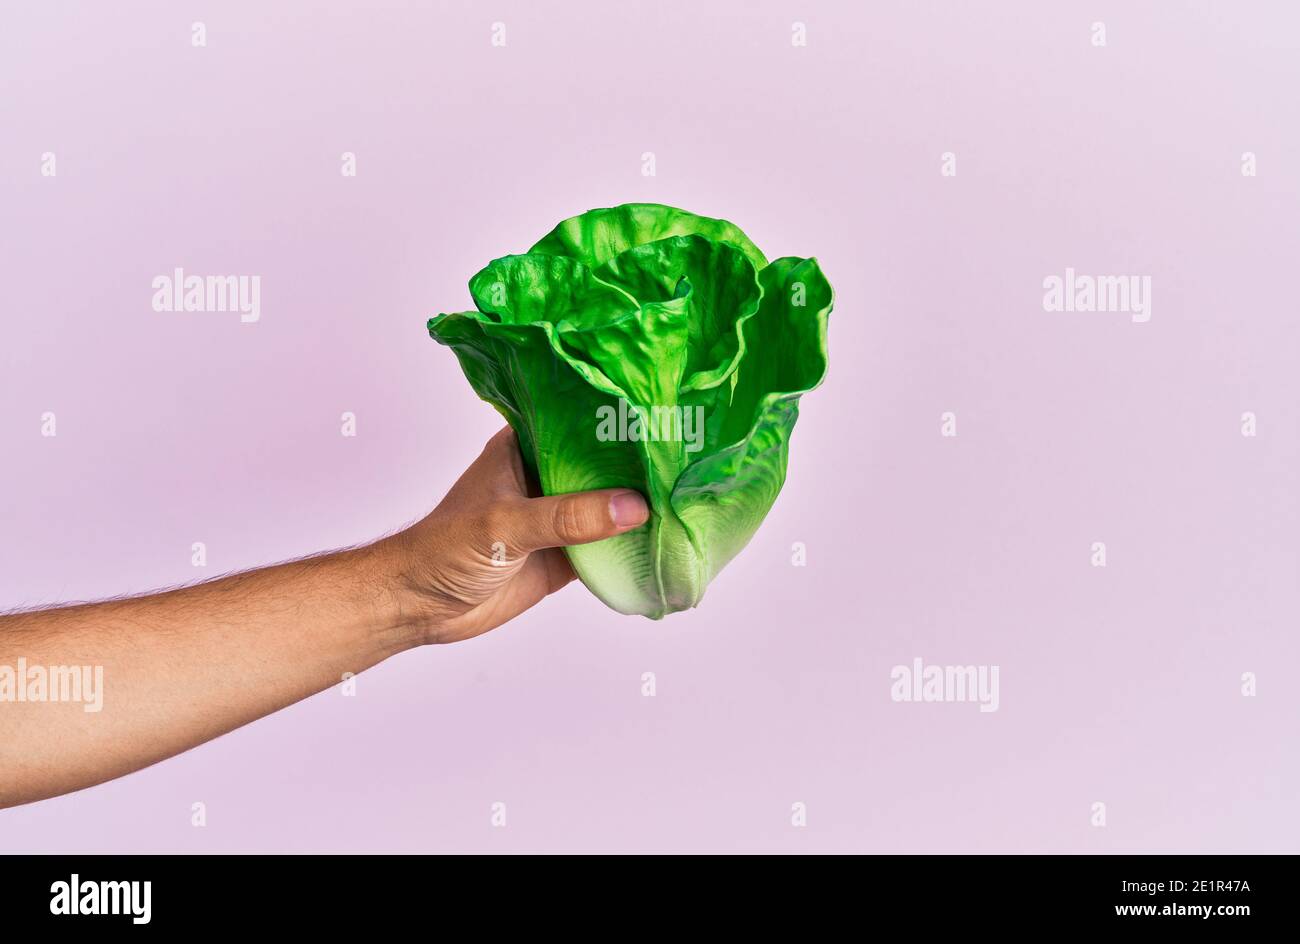 Hand of hispanic man holding lettuce over isolated pink background. Stock Photo